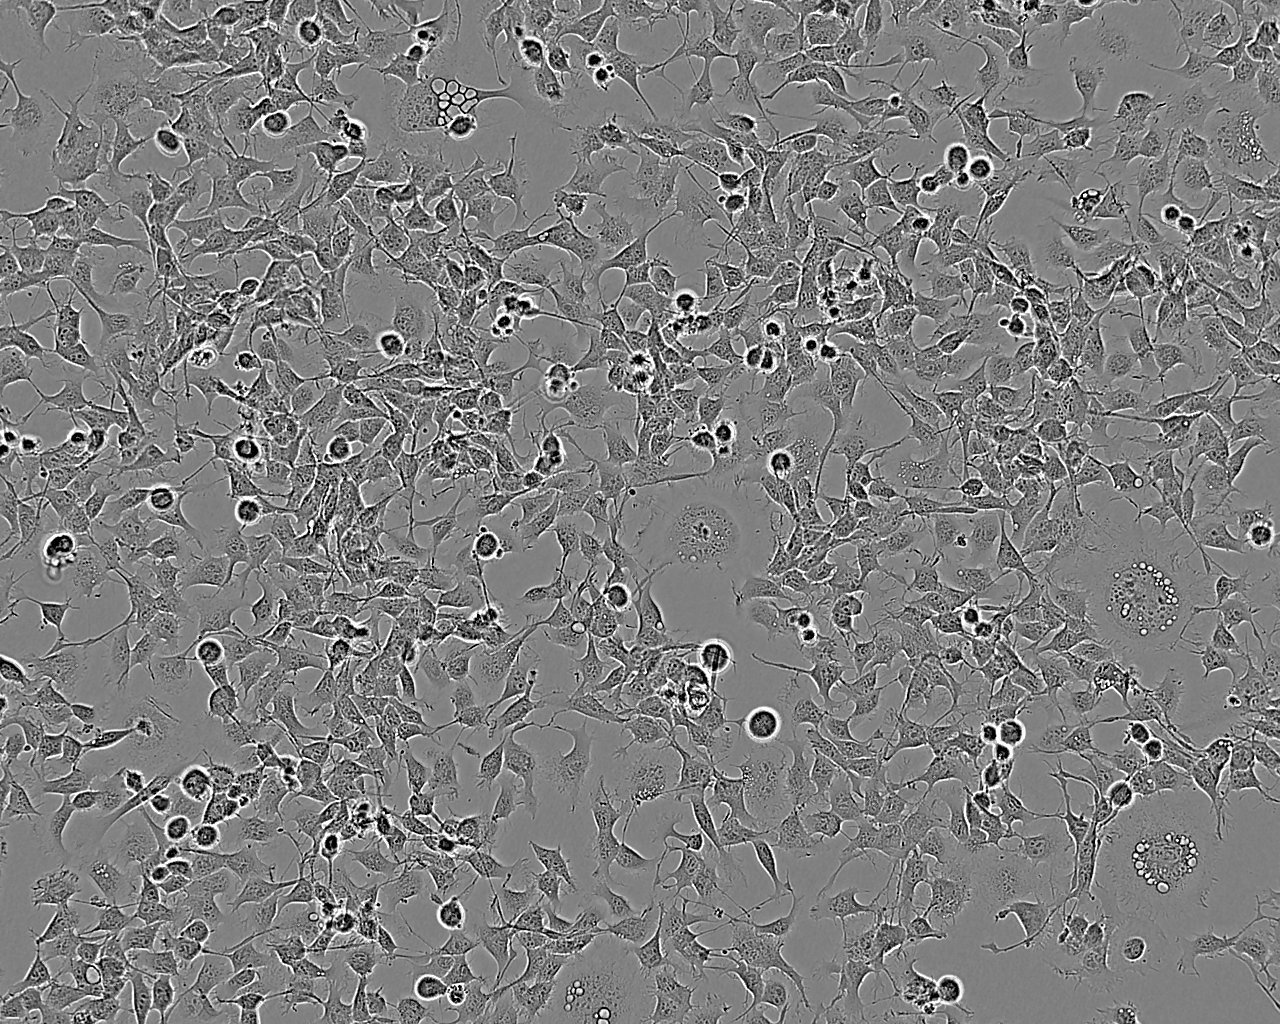 LAPC-4 cell line人前列腺癌细胞系